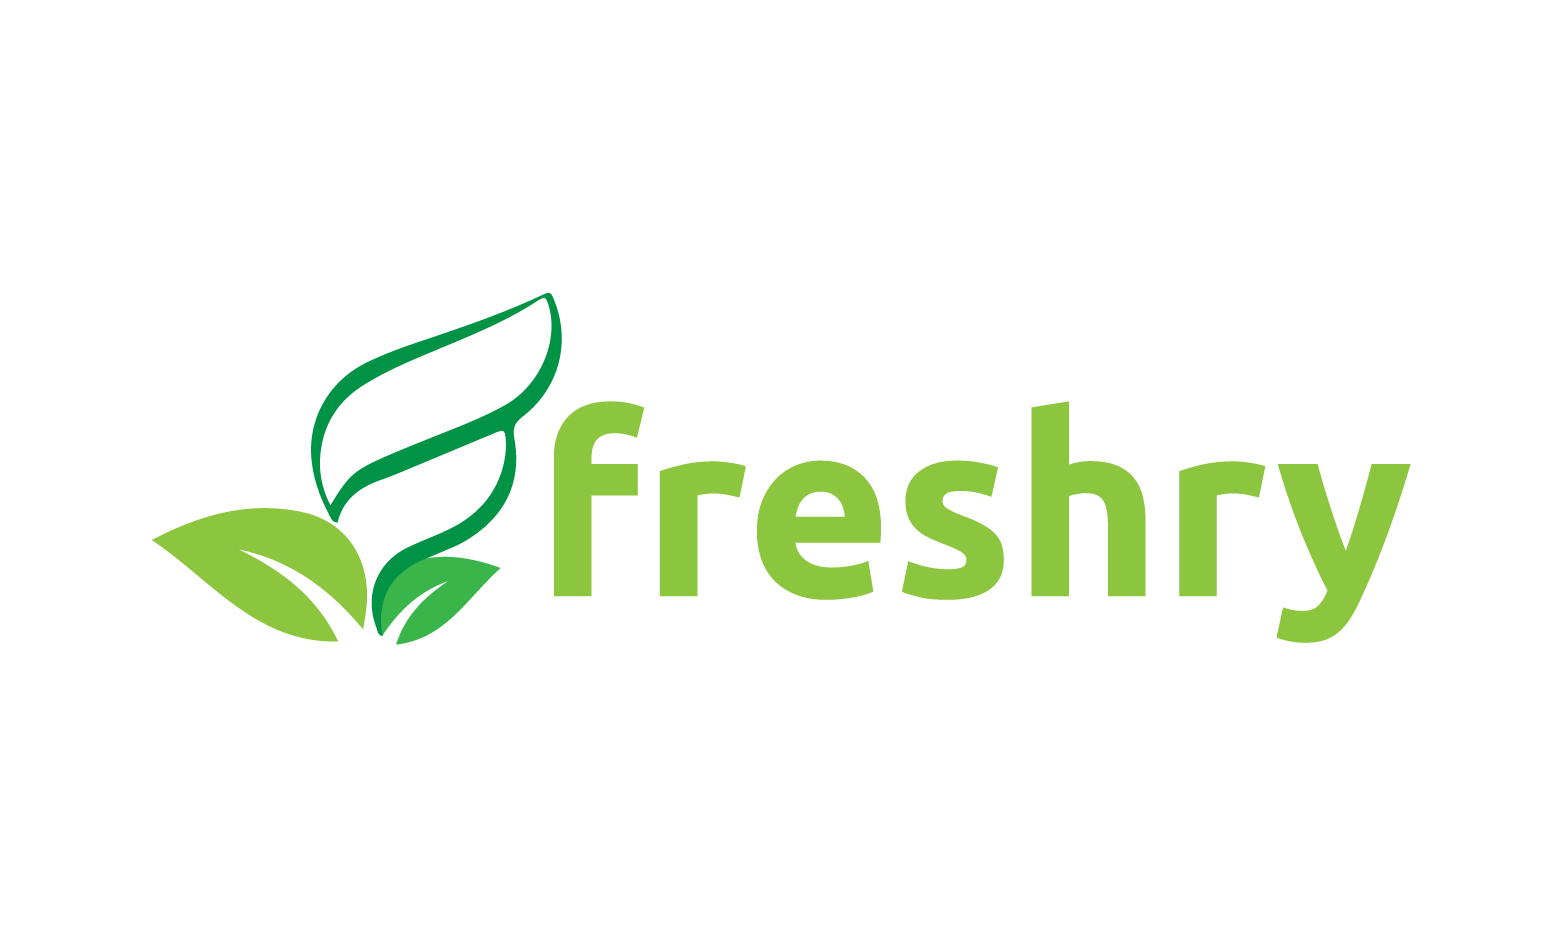 Freshry.com - Creative brandable domain for sale